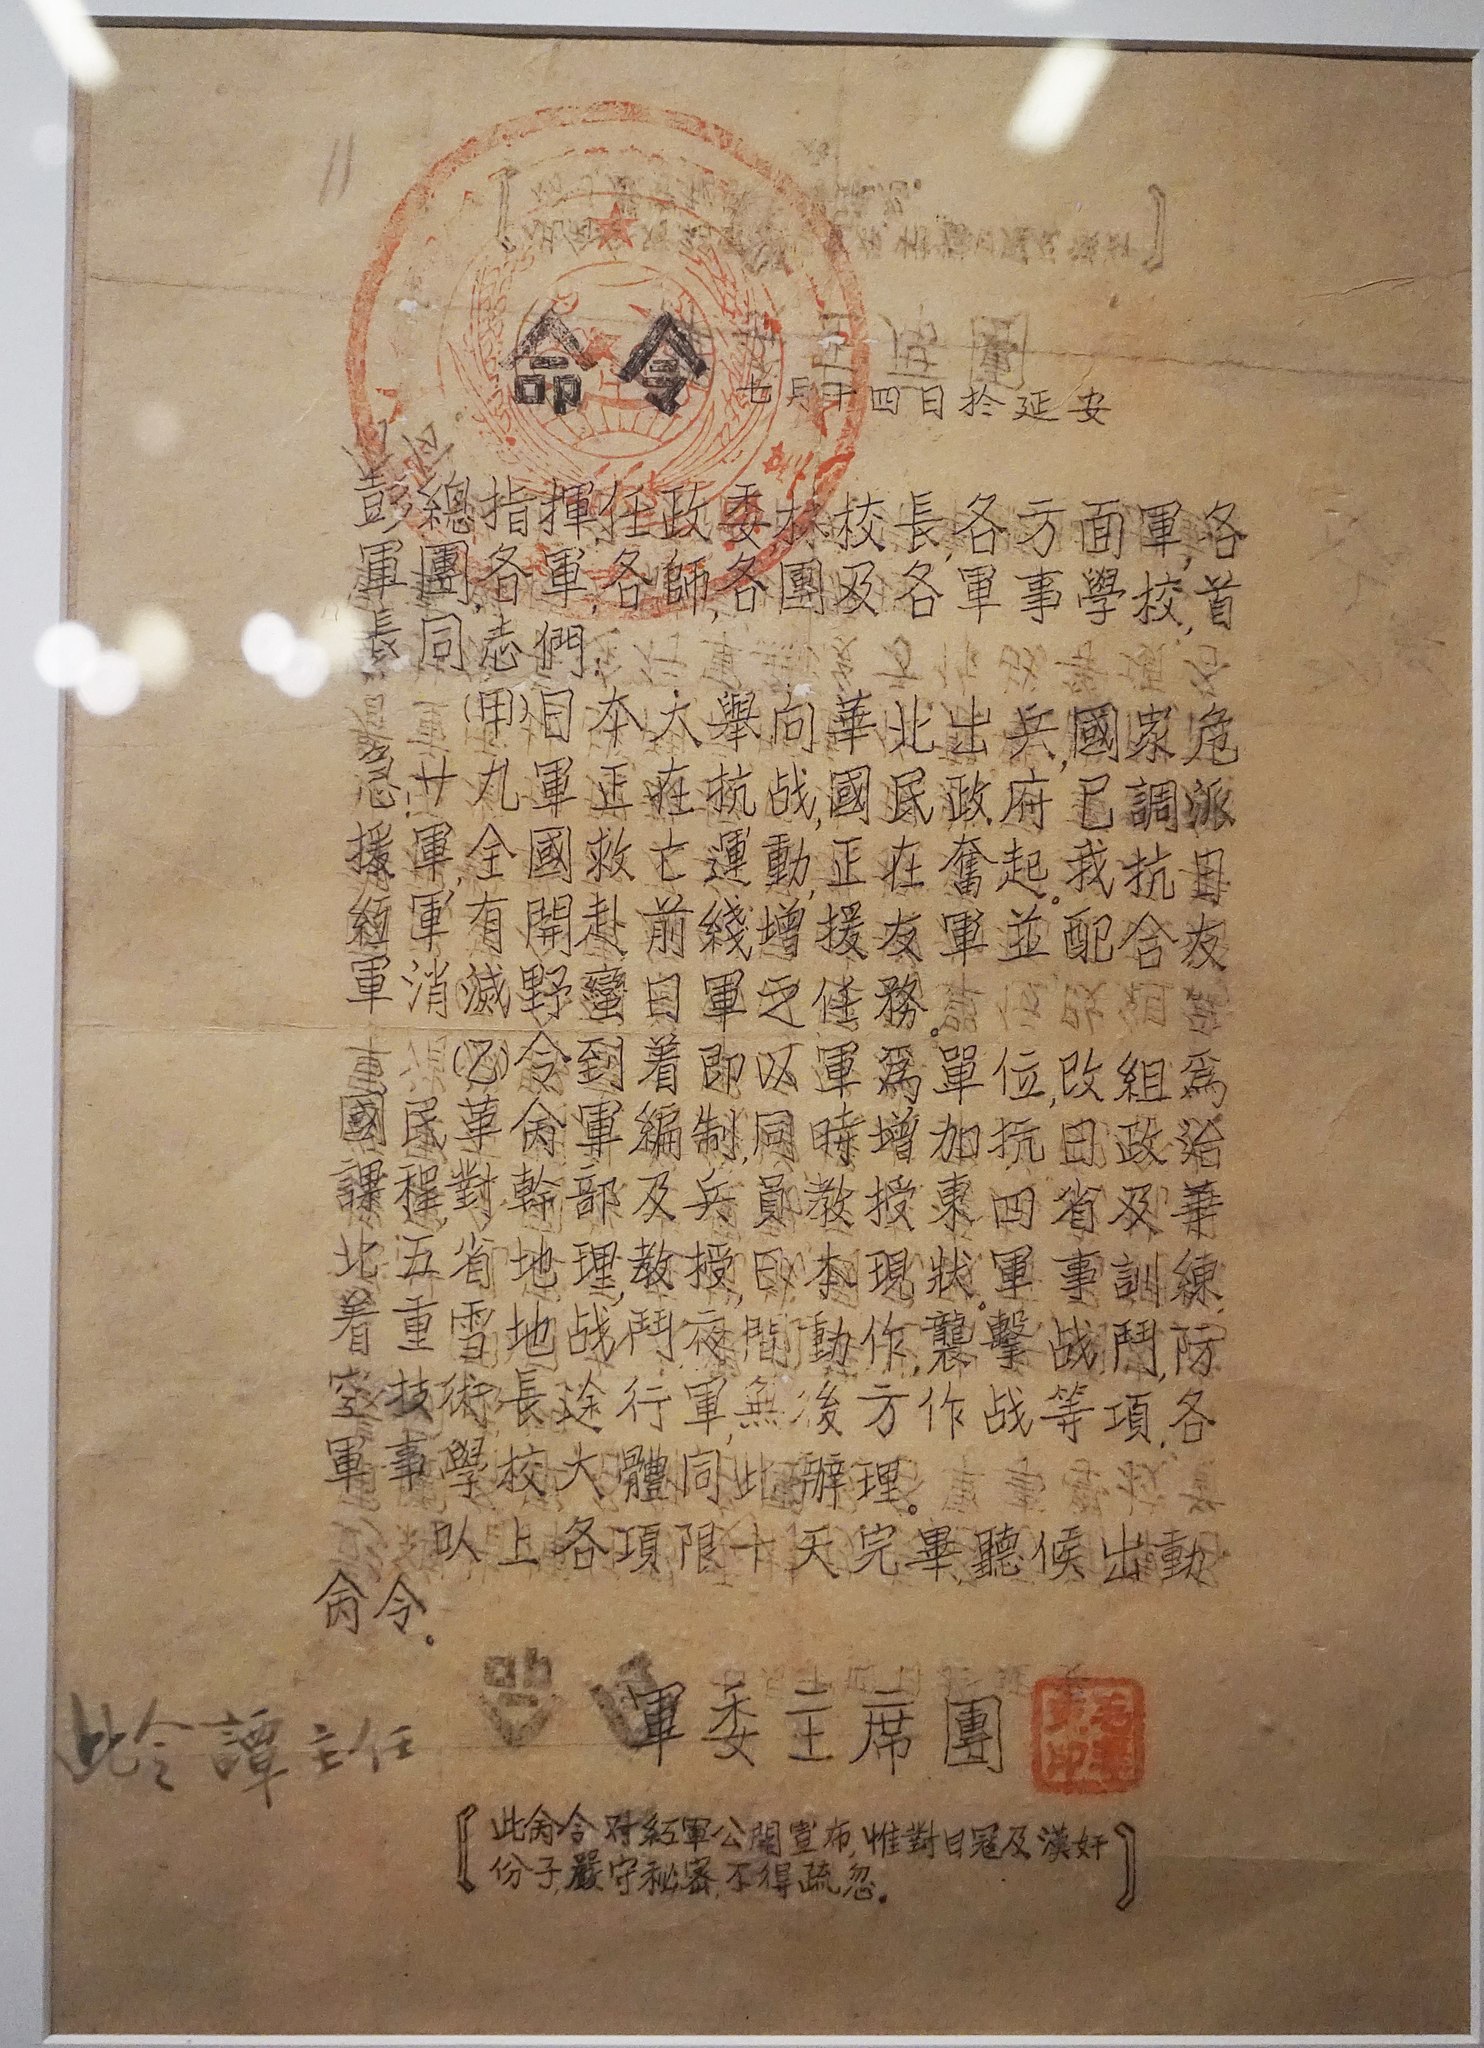 File:1937年红军改组为国民革命军命令.jpg - Wikipedia